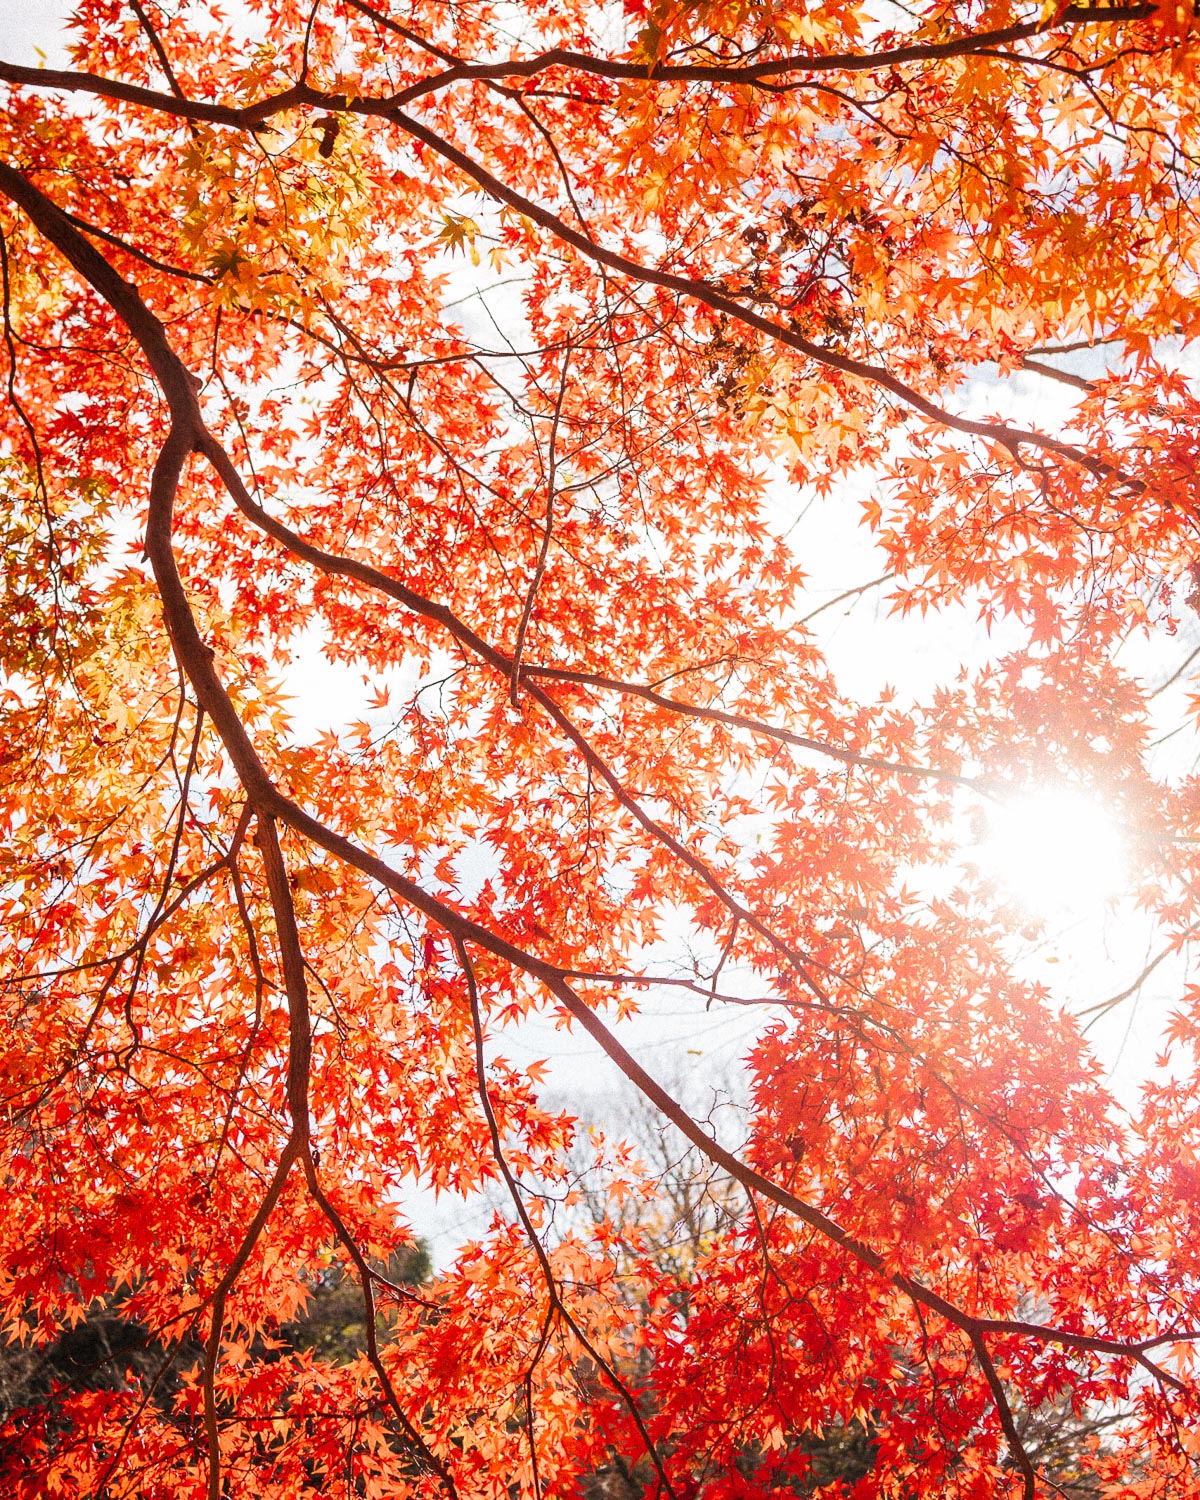 Kyoto Autumn foliage spots